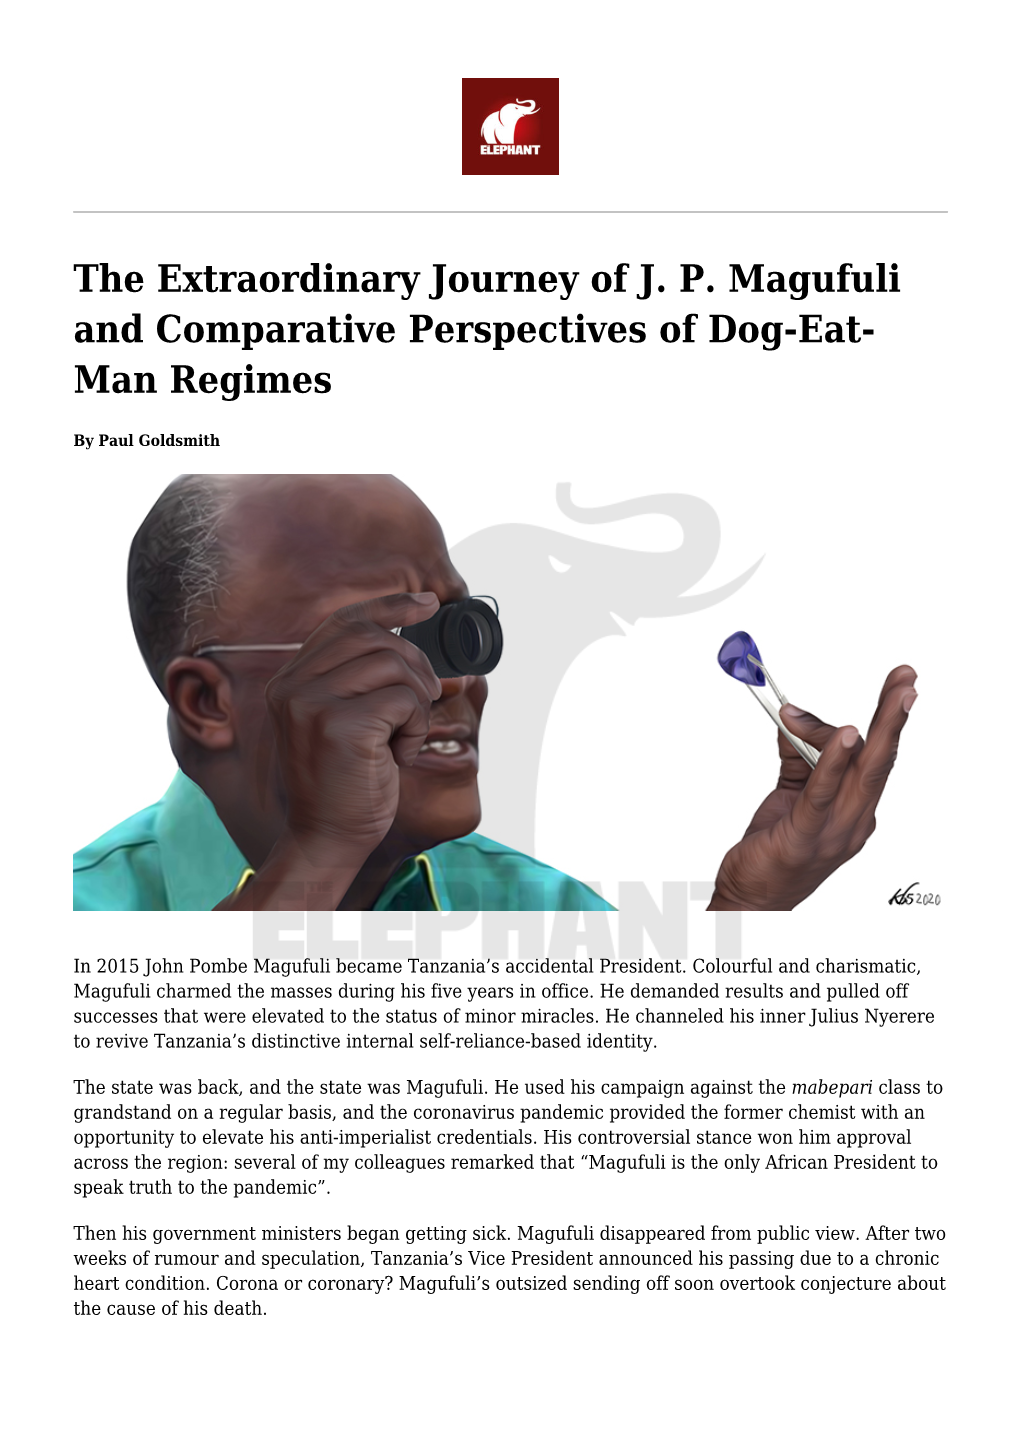 The Extraordinary Journey of JP Magufuli